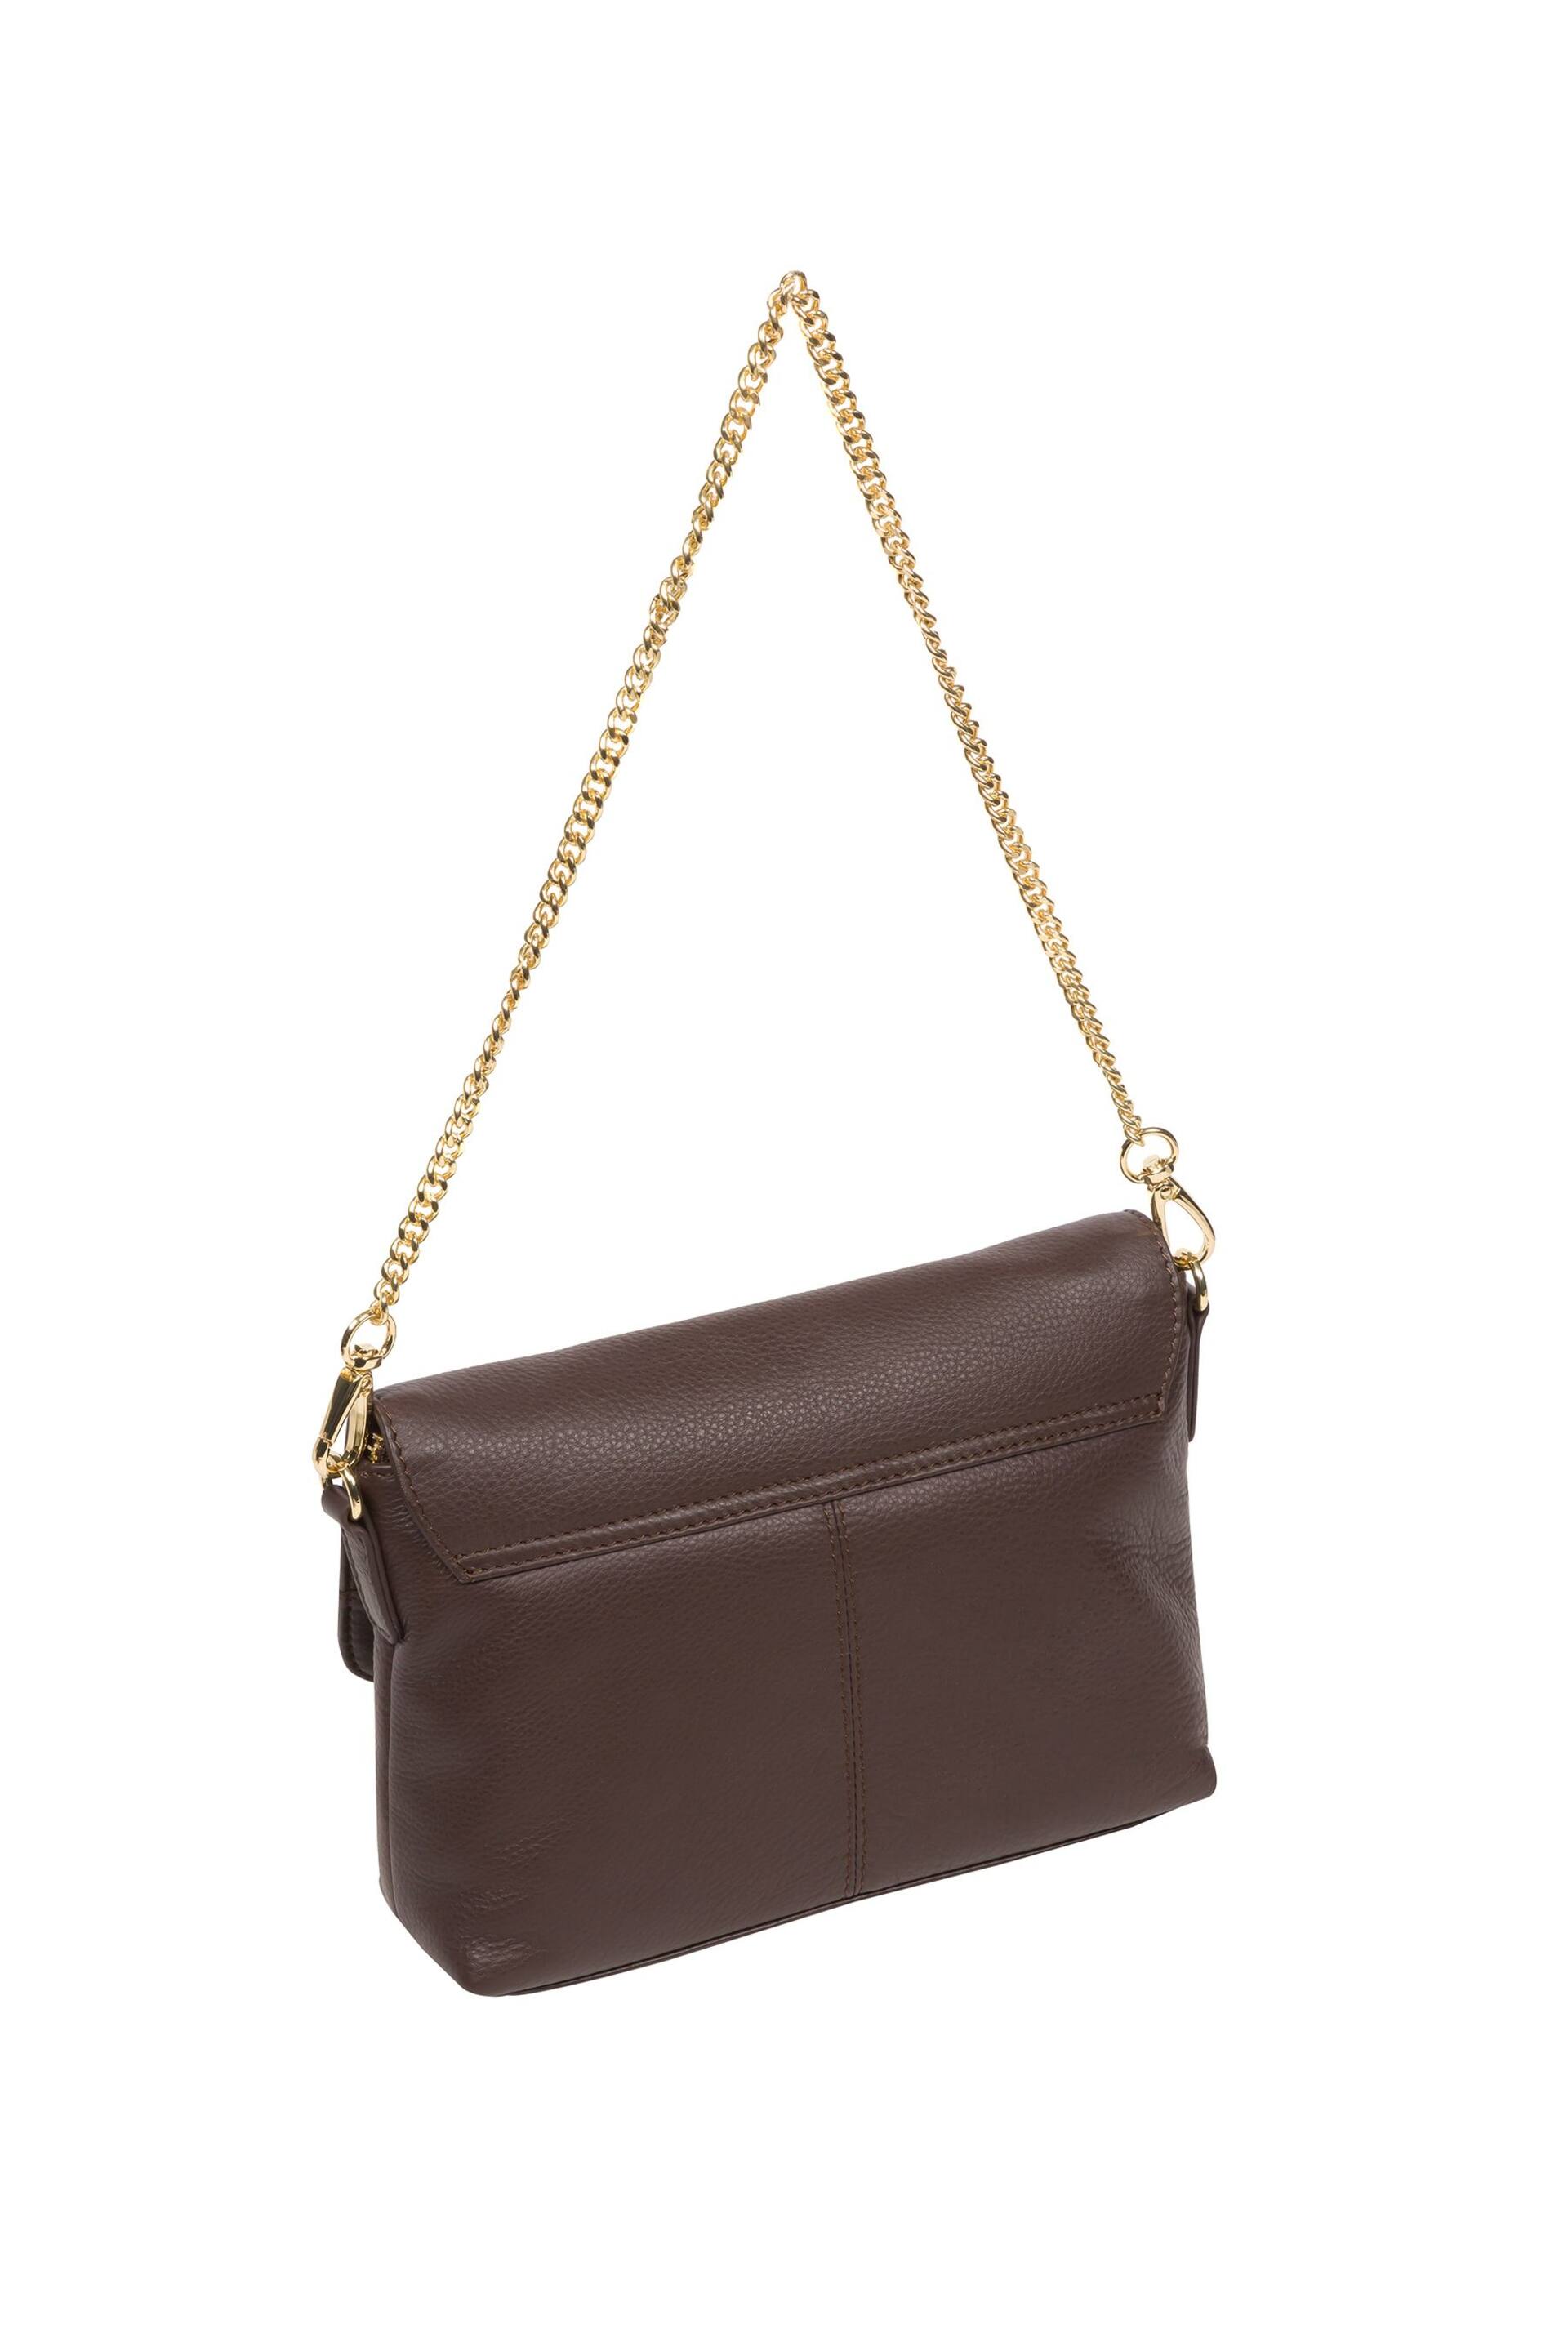 Pure Luxuries London Jazmine Nappa Leather Grab Clutch Bag - Image 2 of 7